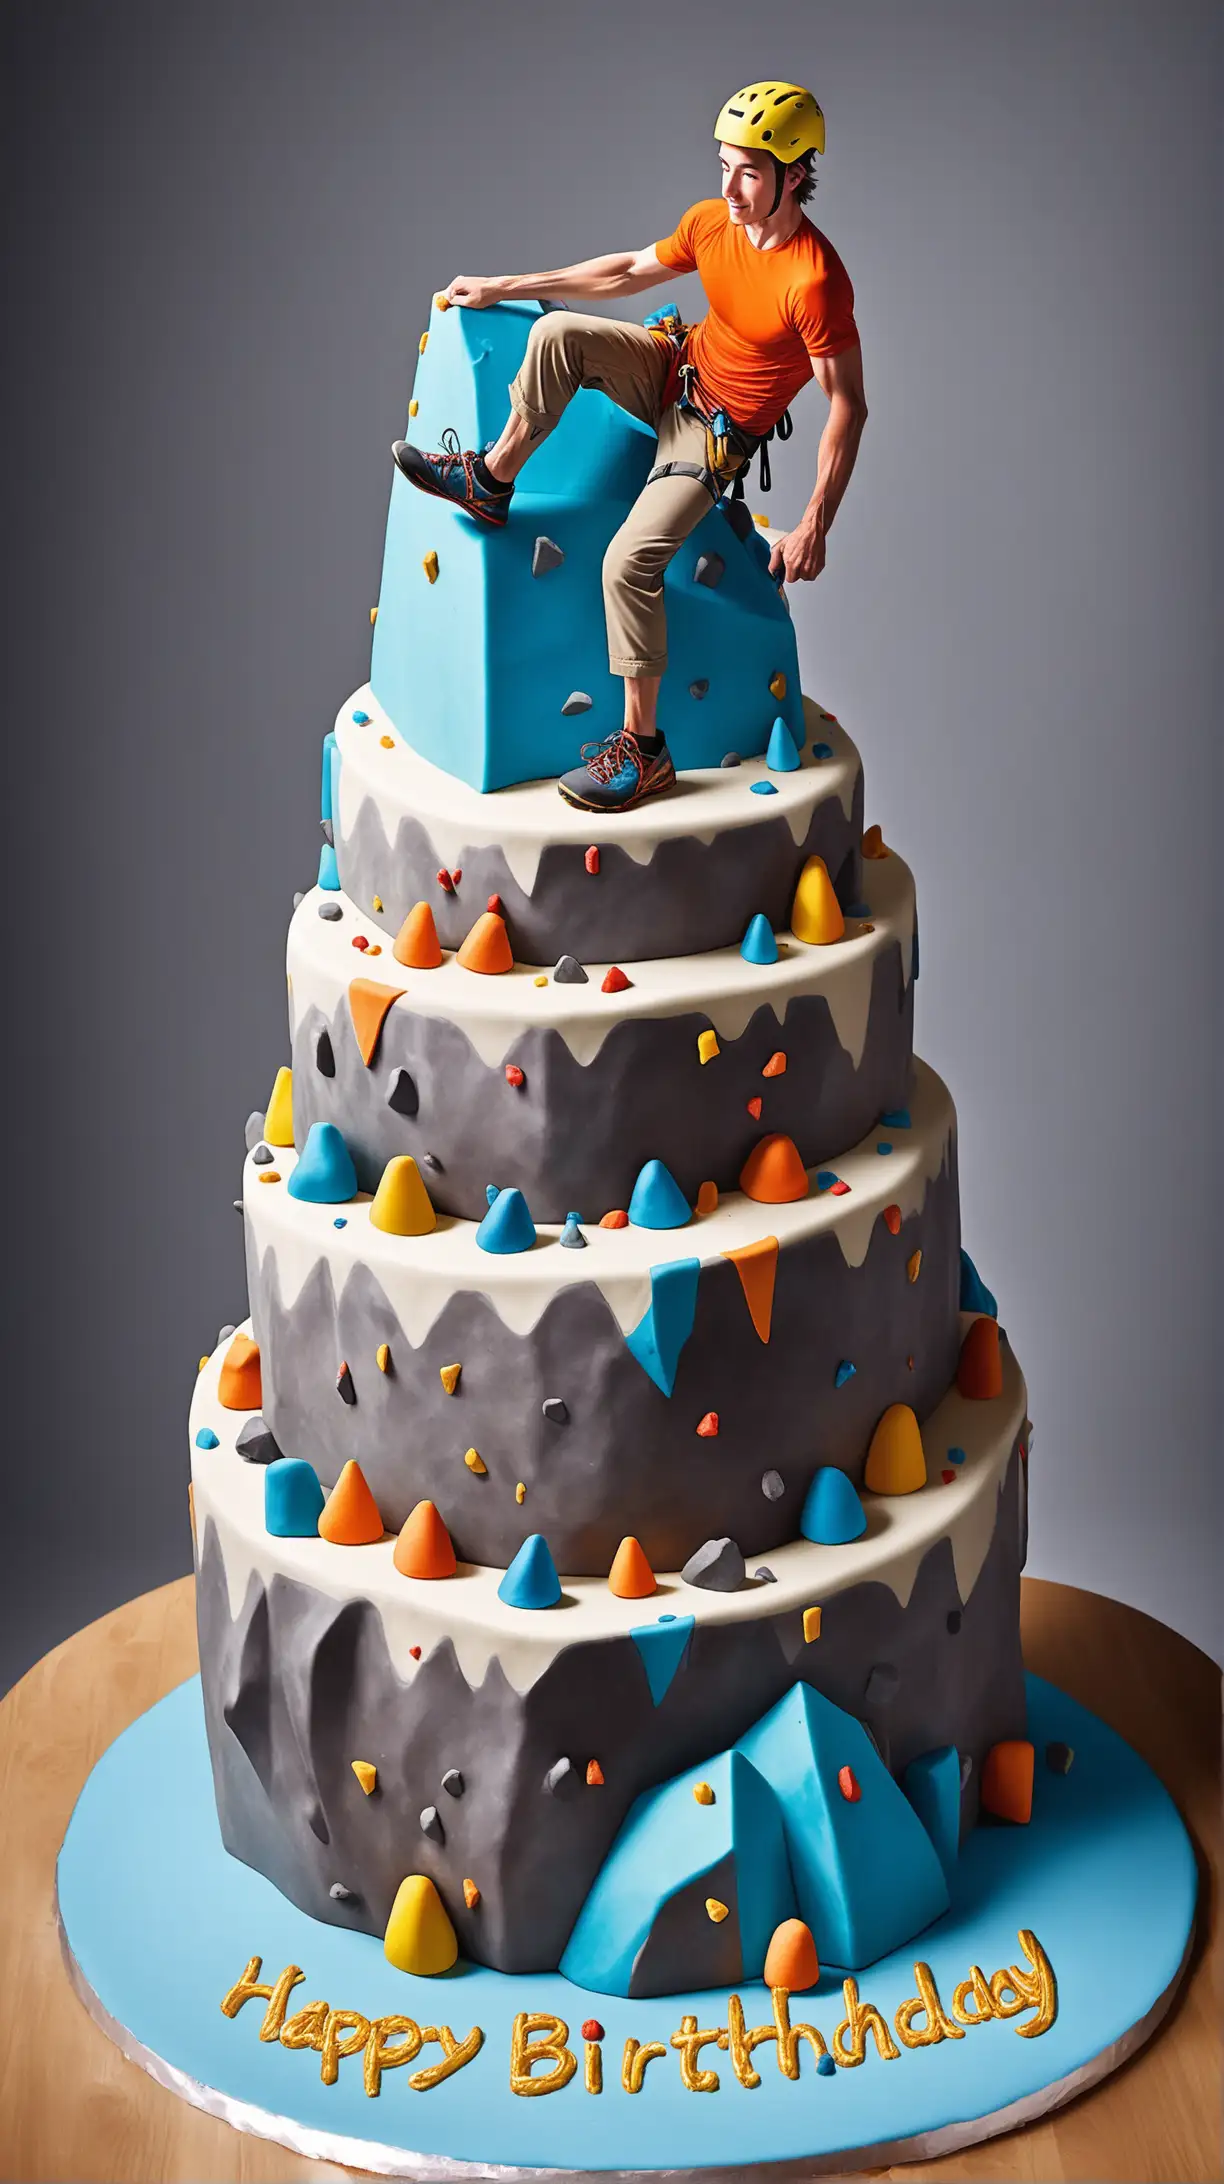 Male Climber Bouldering on Happy Birthday Cake Celebration